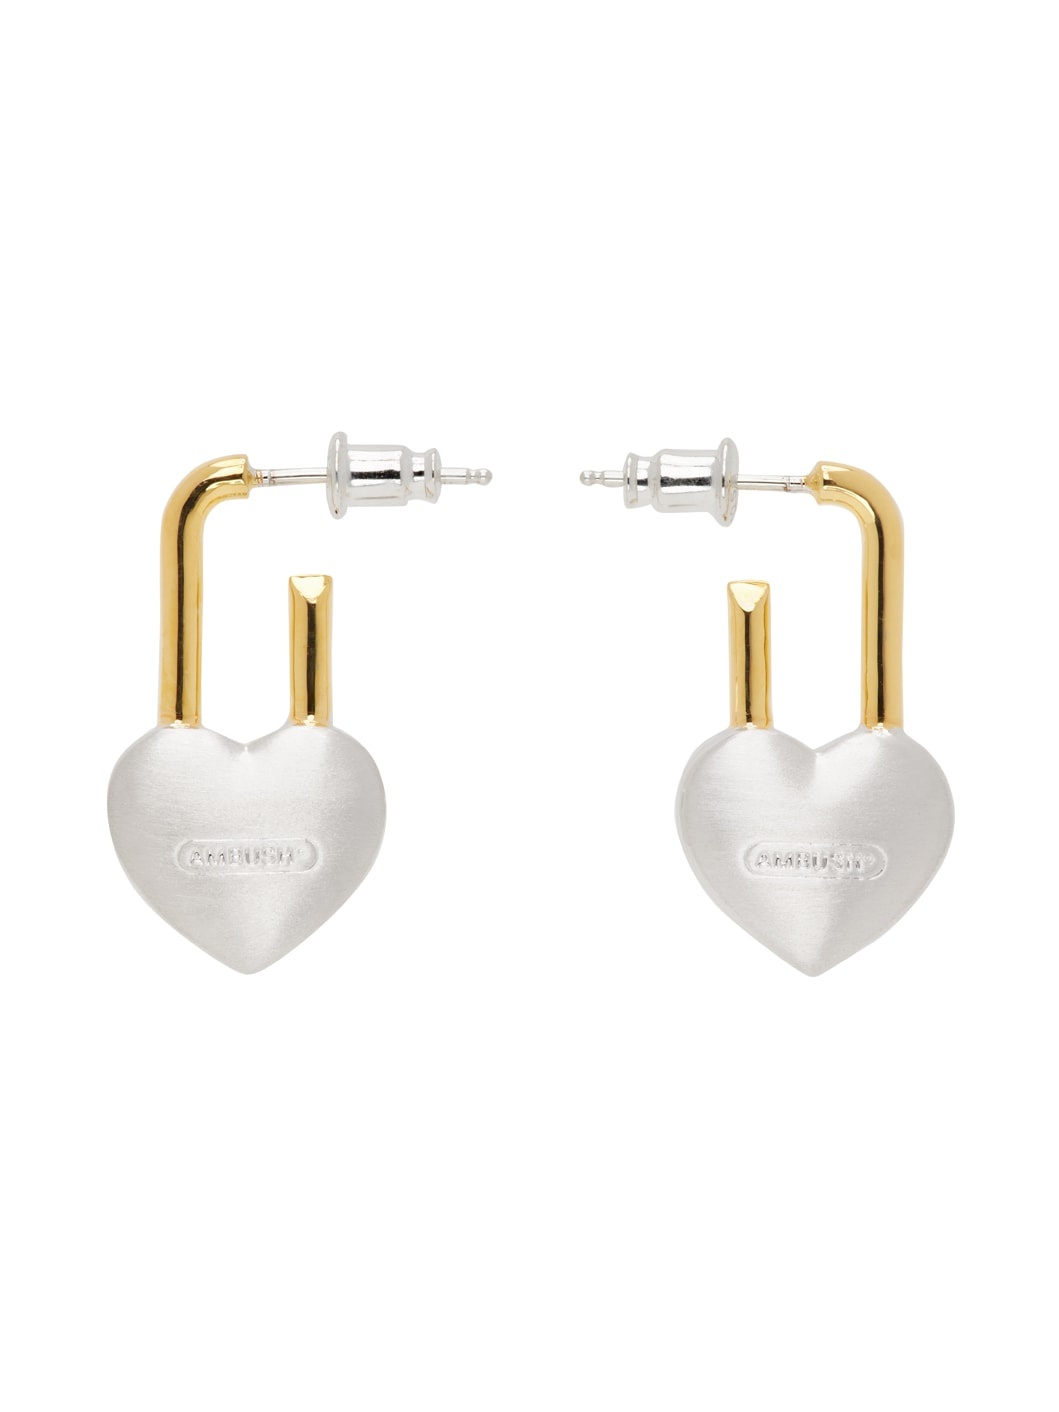 Silver & Gold Small Heart Padlock Earrings - 1